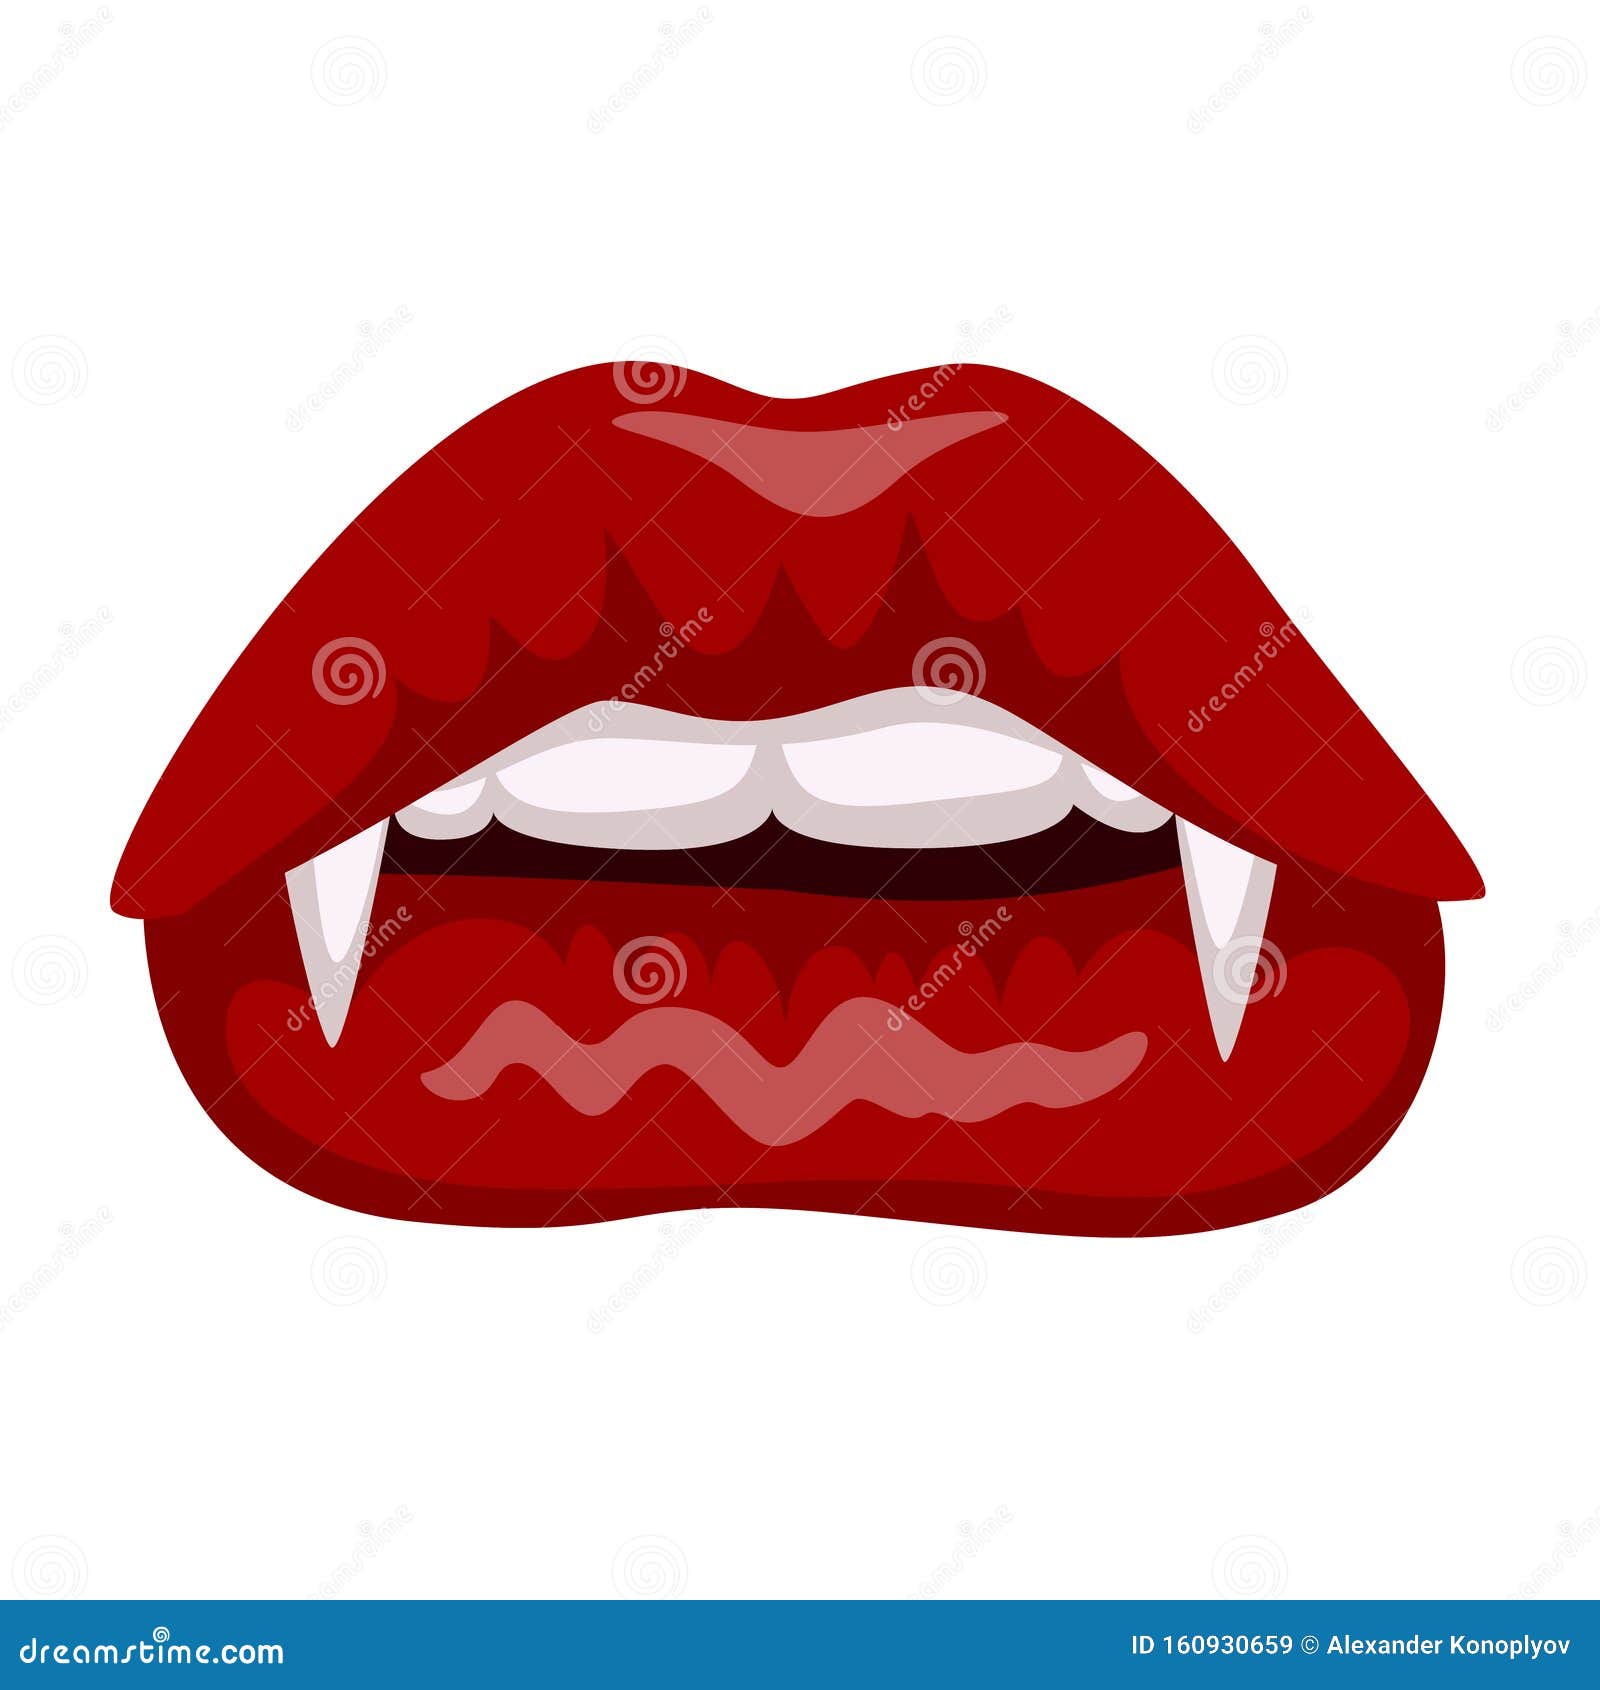 Dentes e lábios de vampiro para o halloween. desenho vetorial conjunto  isolado